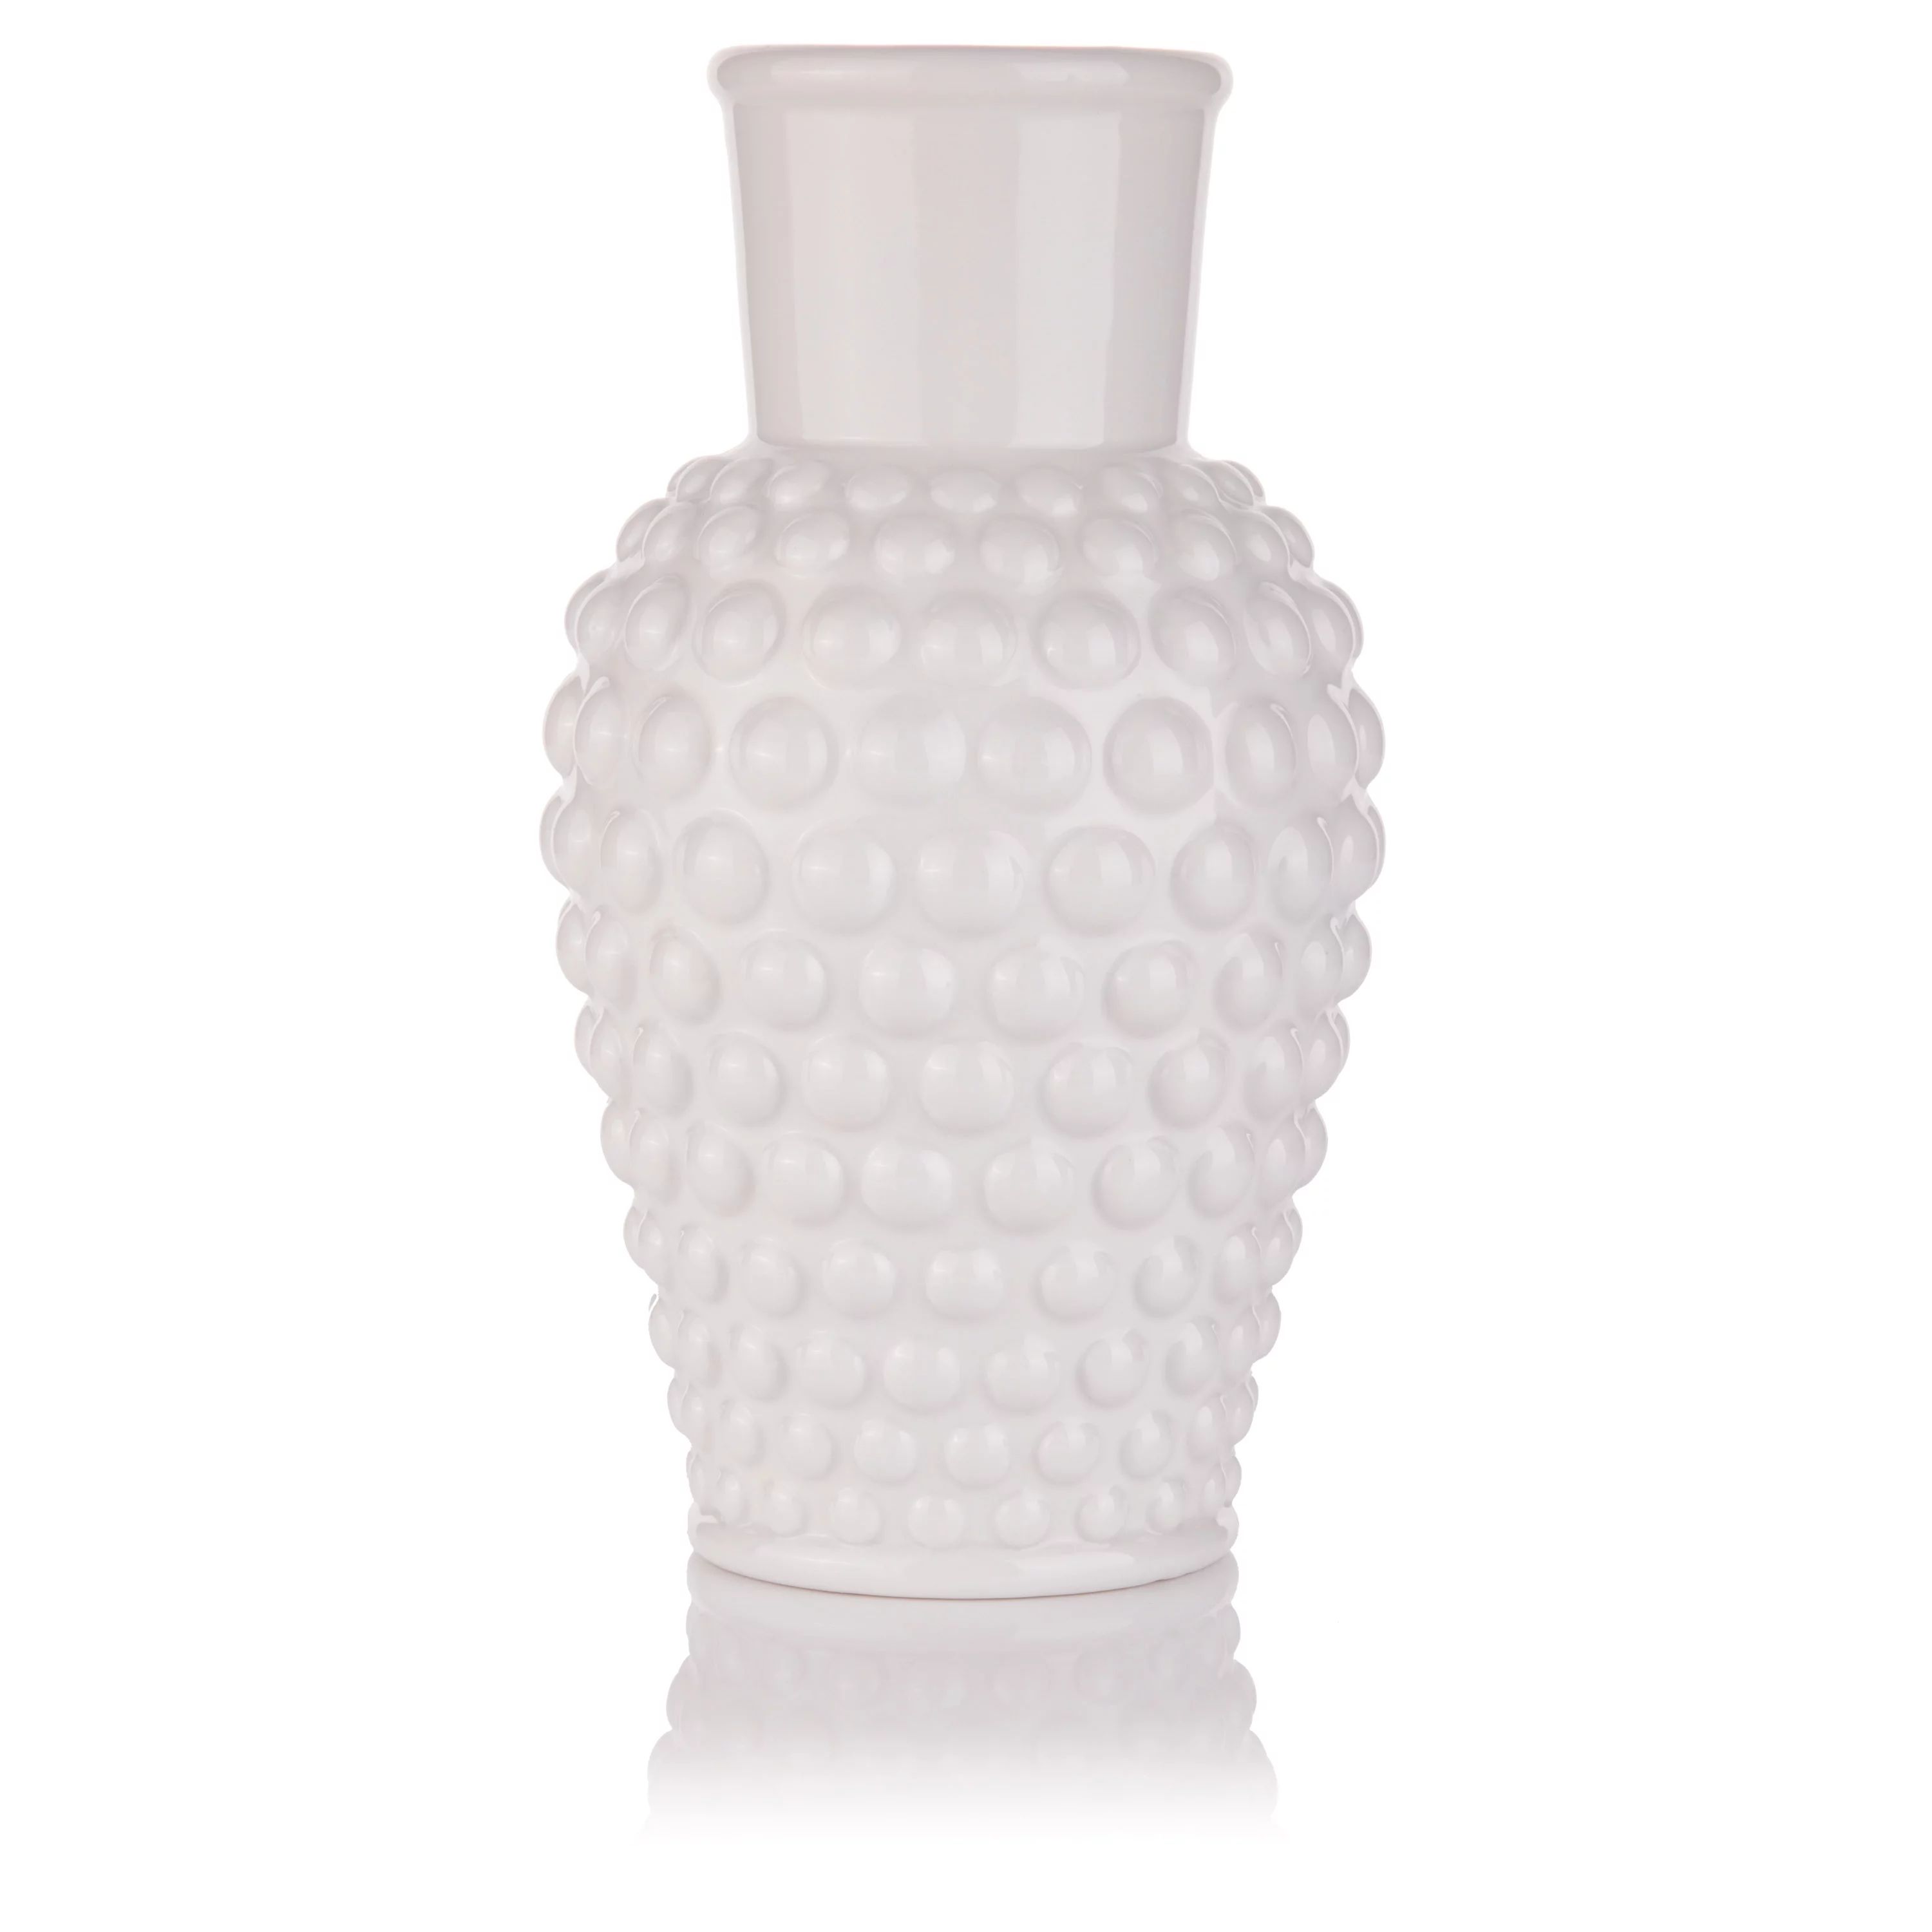 My Texas House Ceramic White Hobnail Vase, 10" | Walmart (US)